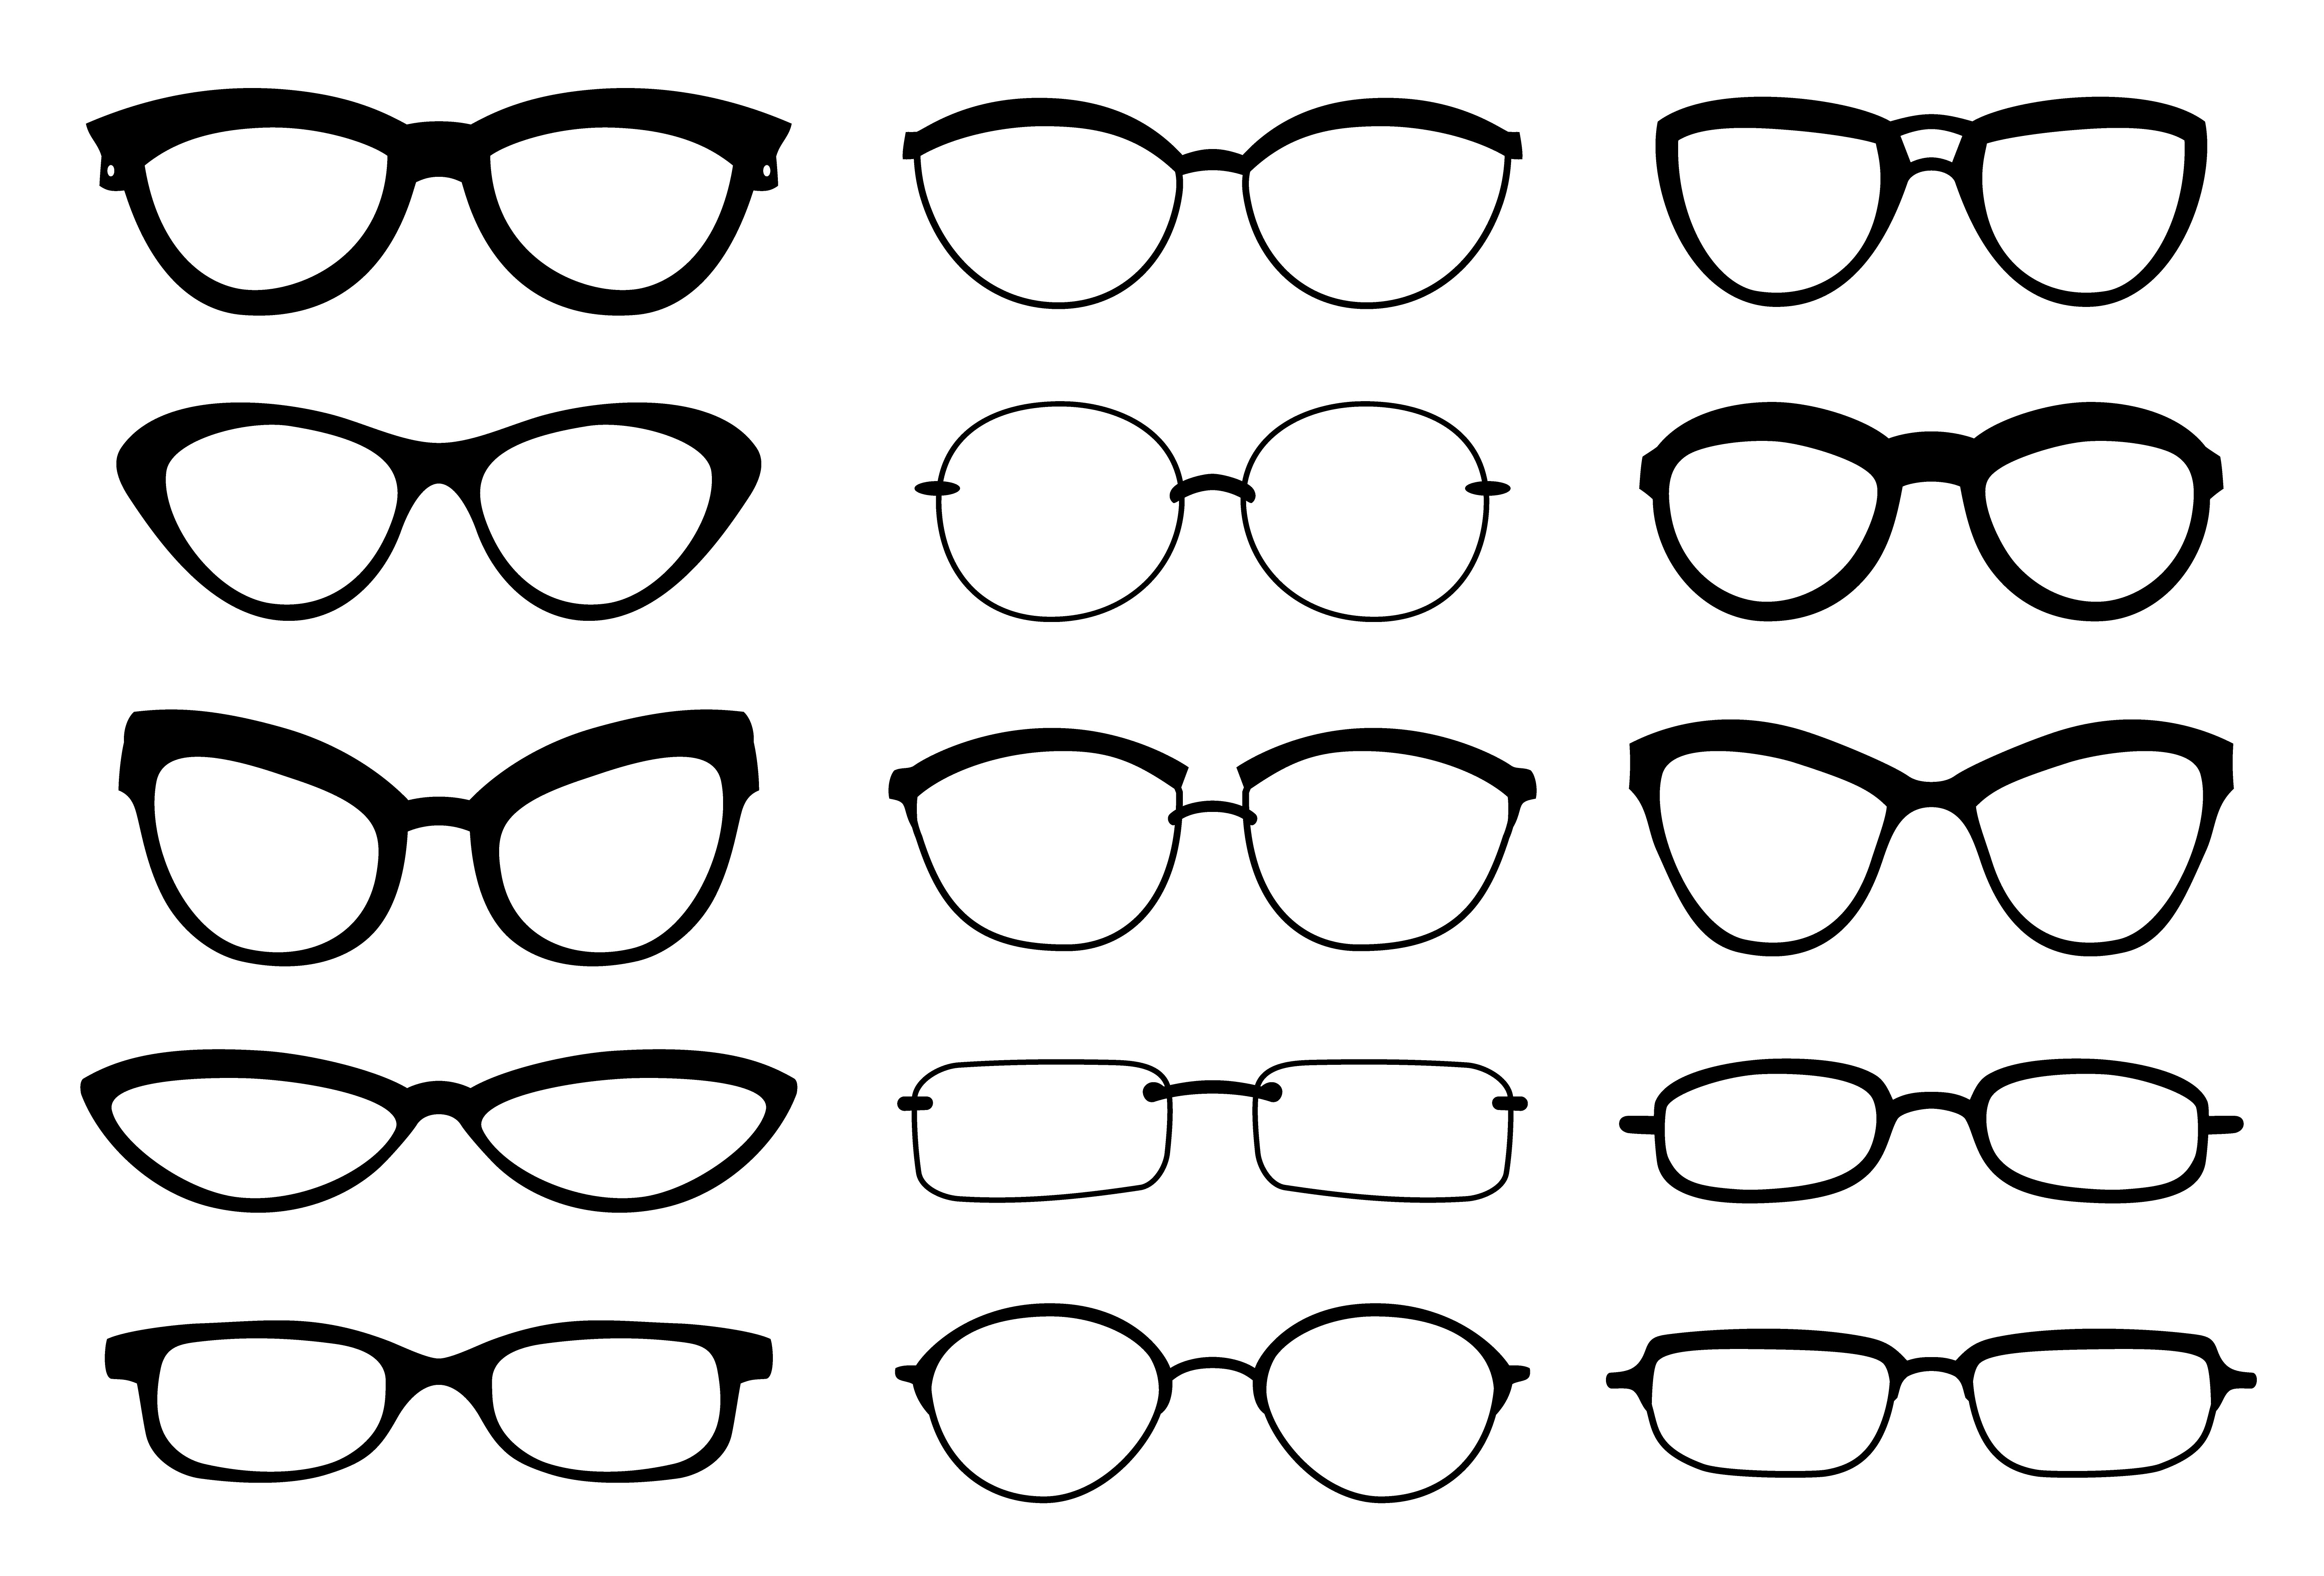 Diferentes formas de gafas. | Imagen: Shutterstock